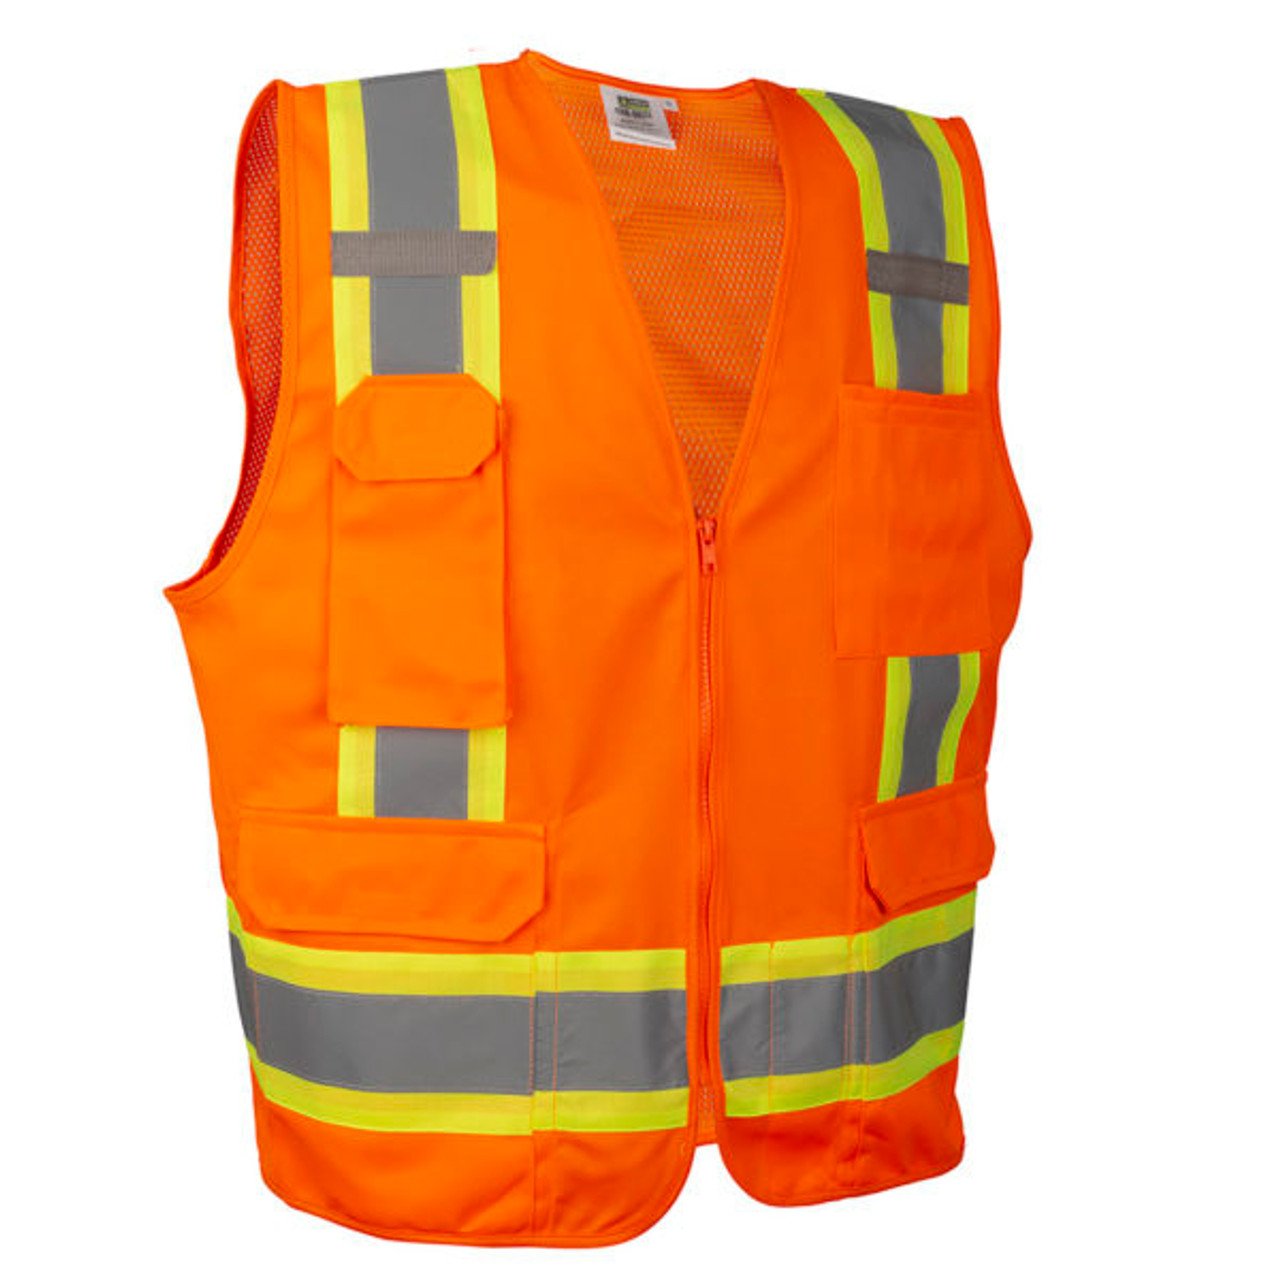 Safety Zone Orange Safety Vest TYPE R, CLASS 2